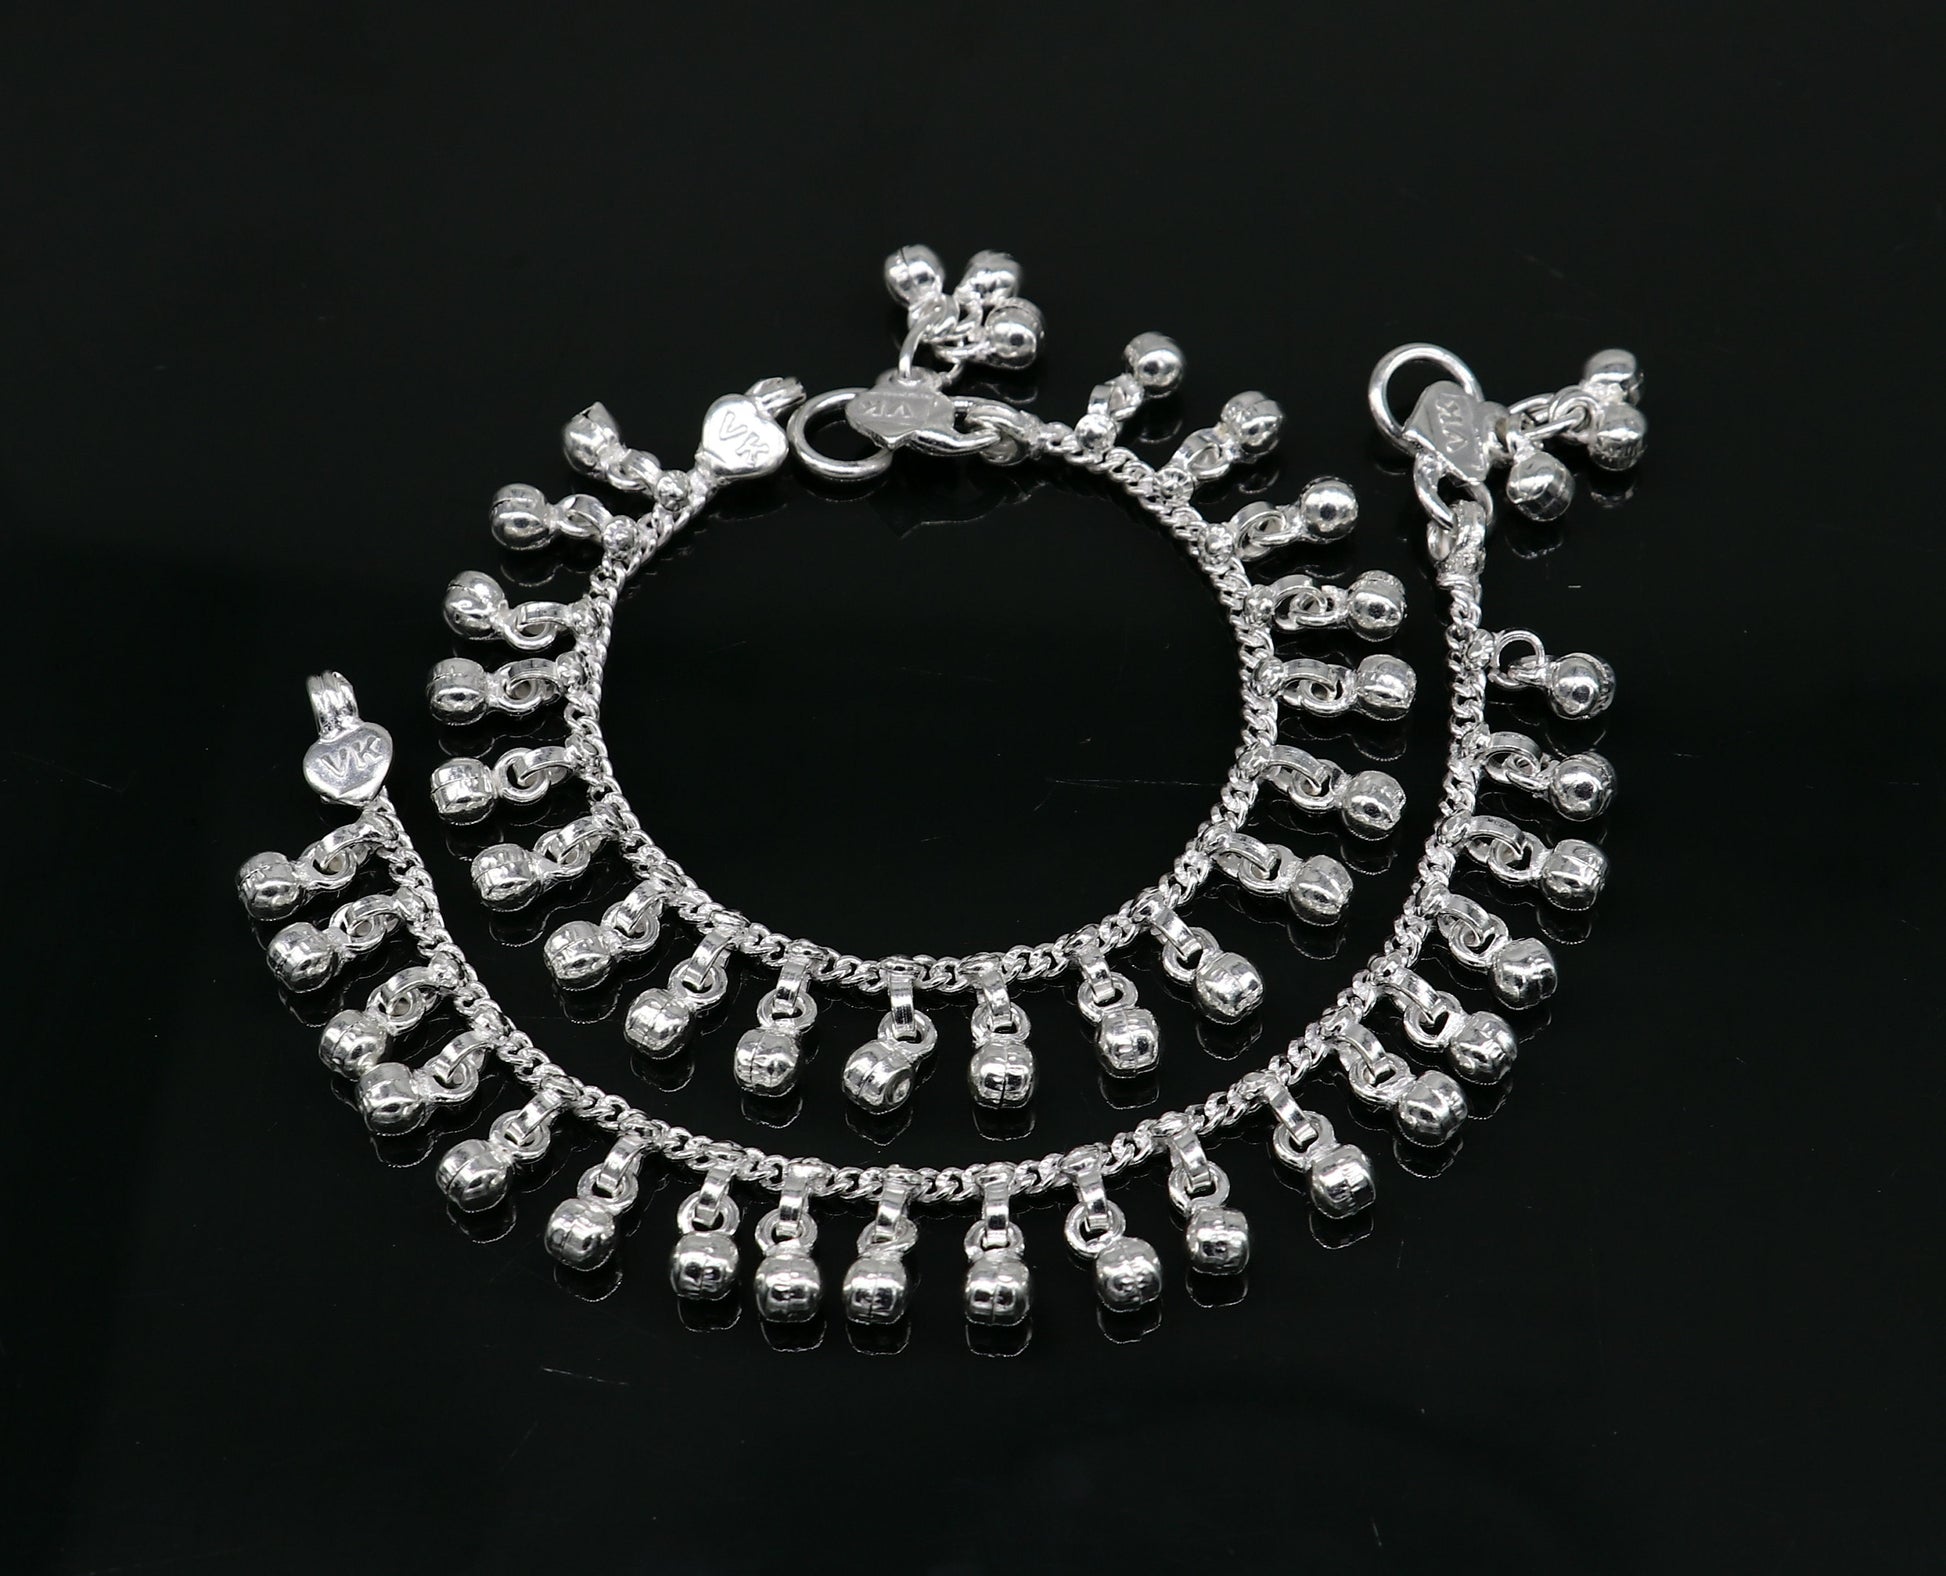 5" long Vintage design sterling silver handmade amazing waved noisy hanging drops bells baby anklet, ankle bracelet, charm bracelet ank430 - TRIBAL ORNAMENTS